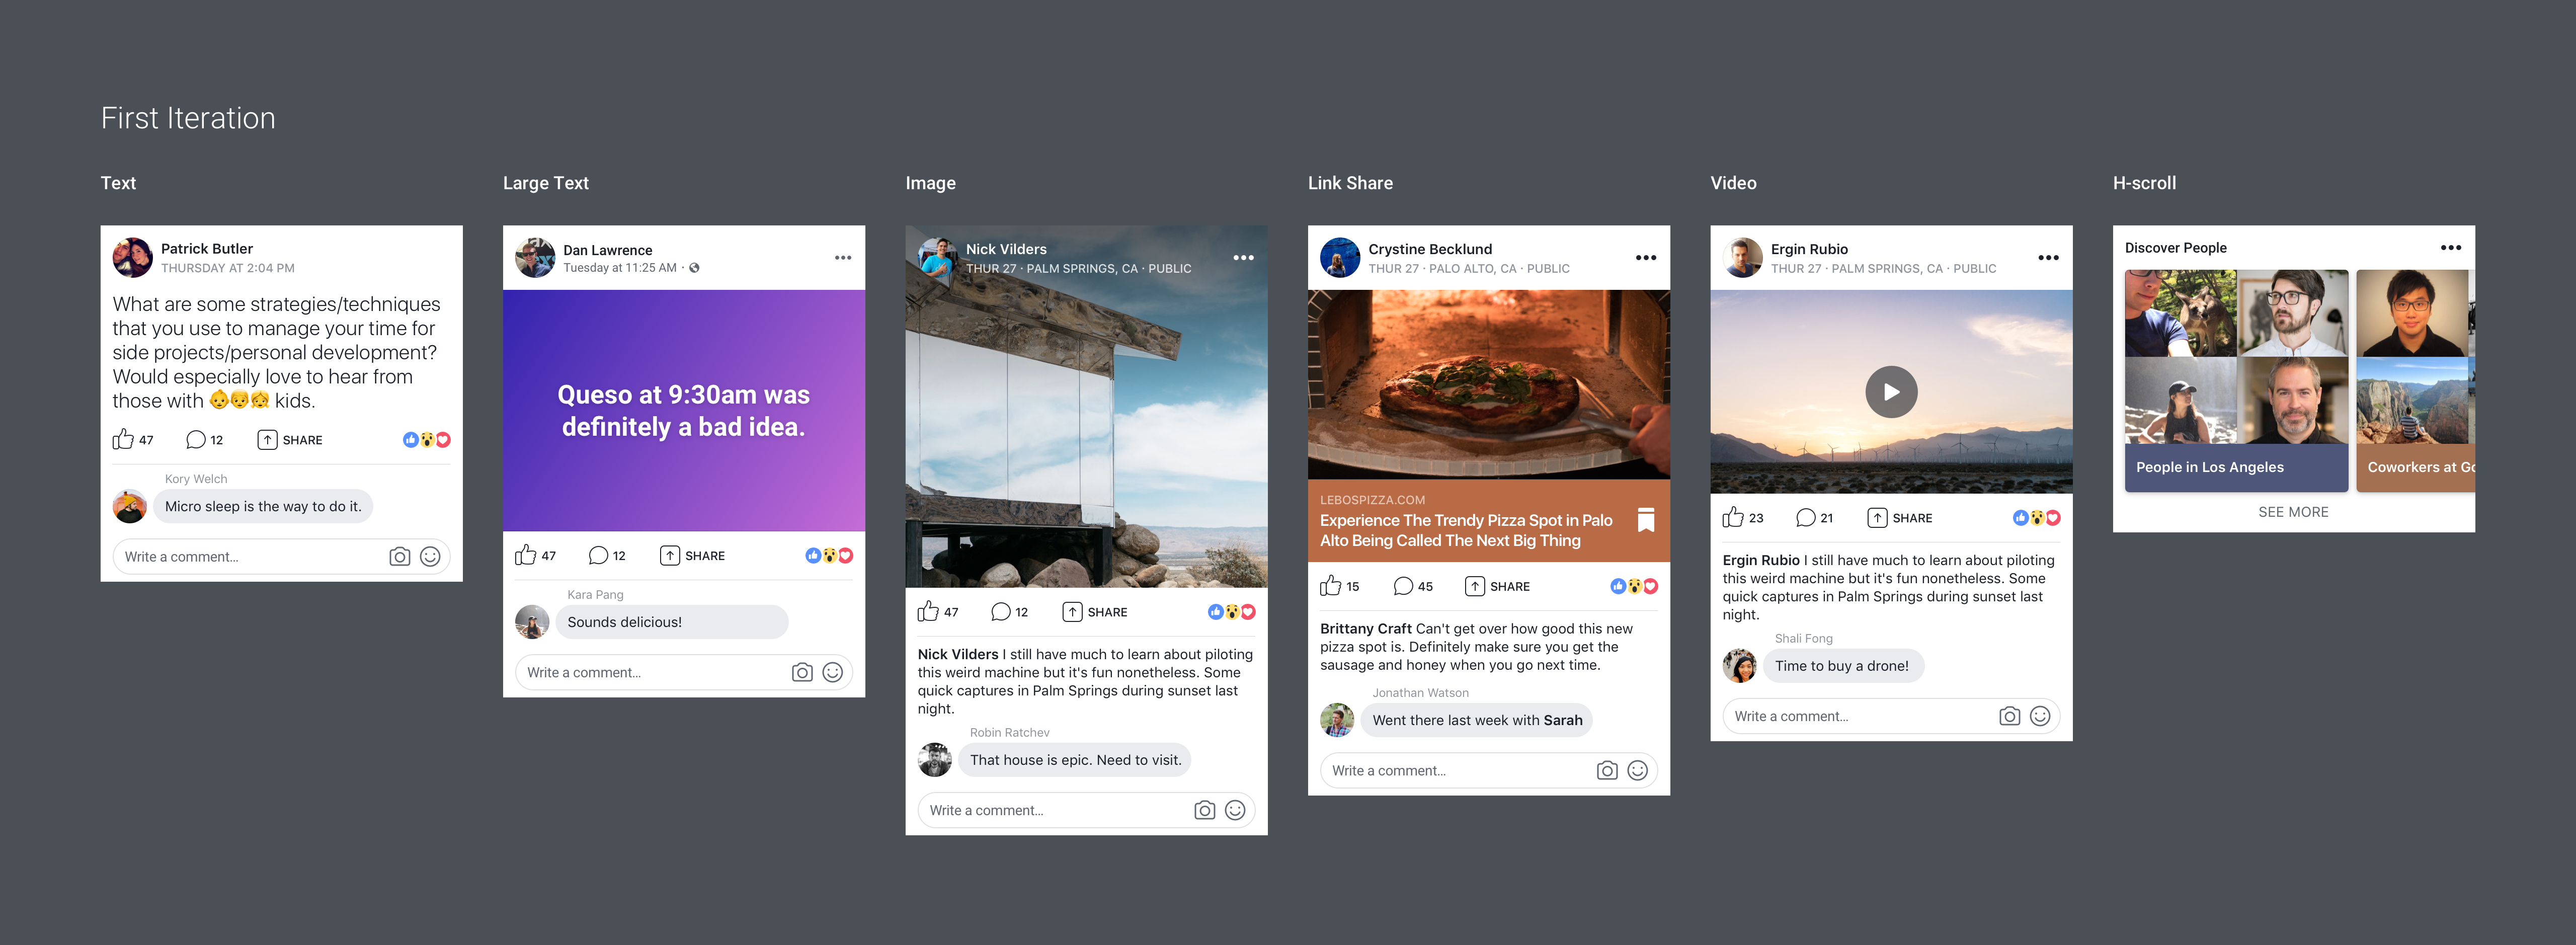 Evolving The Facebook News Feed To Serve You Better By Ryan Freitas Facebook Design Medium